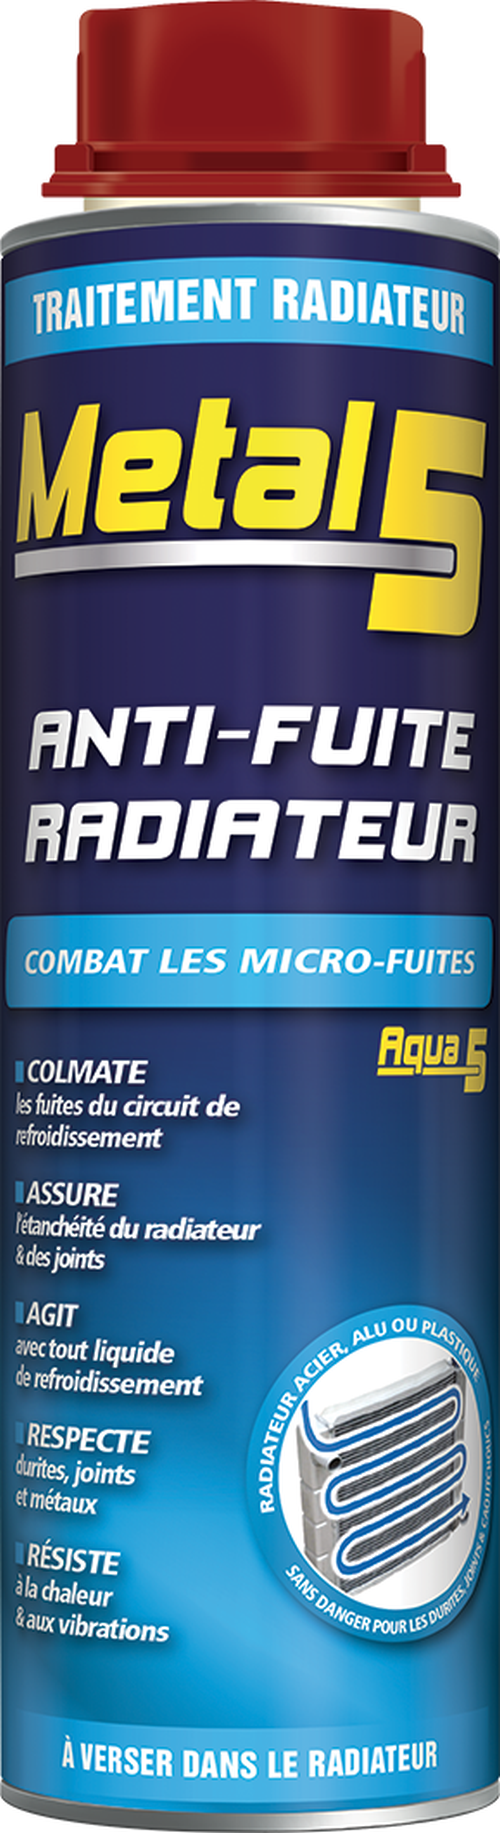 Anti-Fuite Radiateur 300 ml - Métal 5